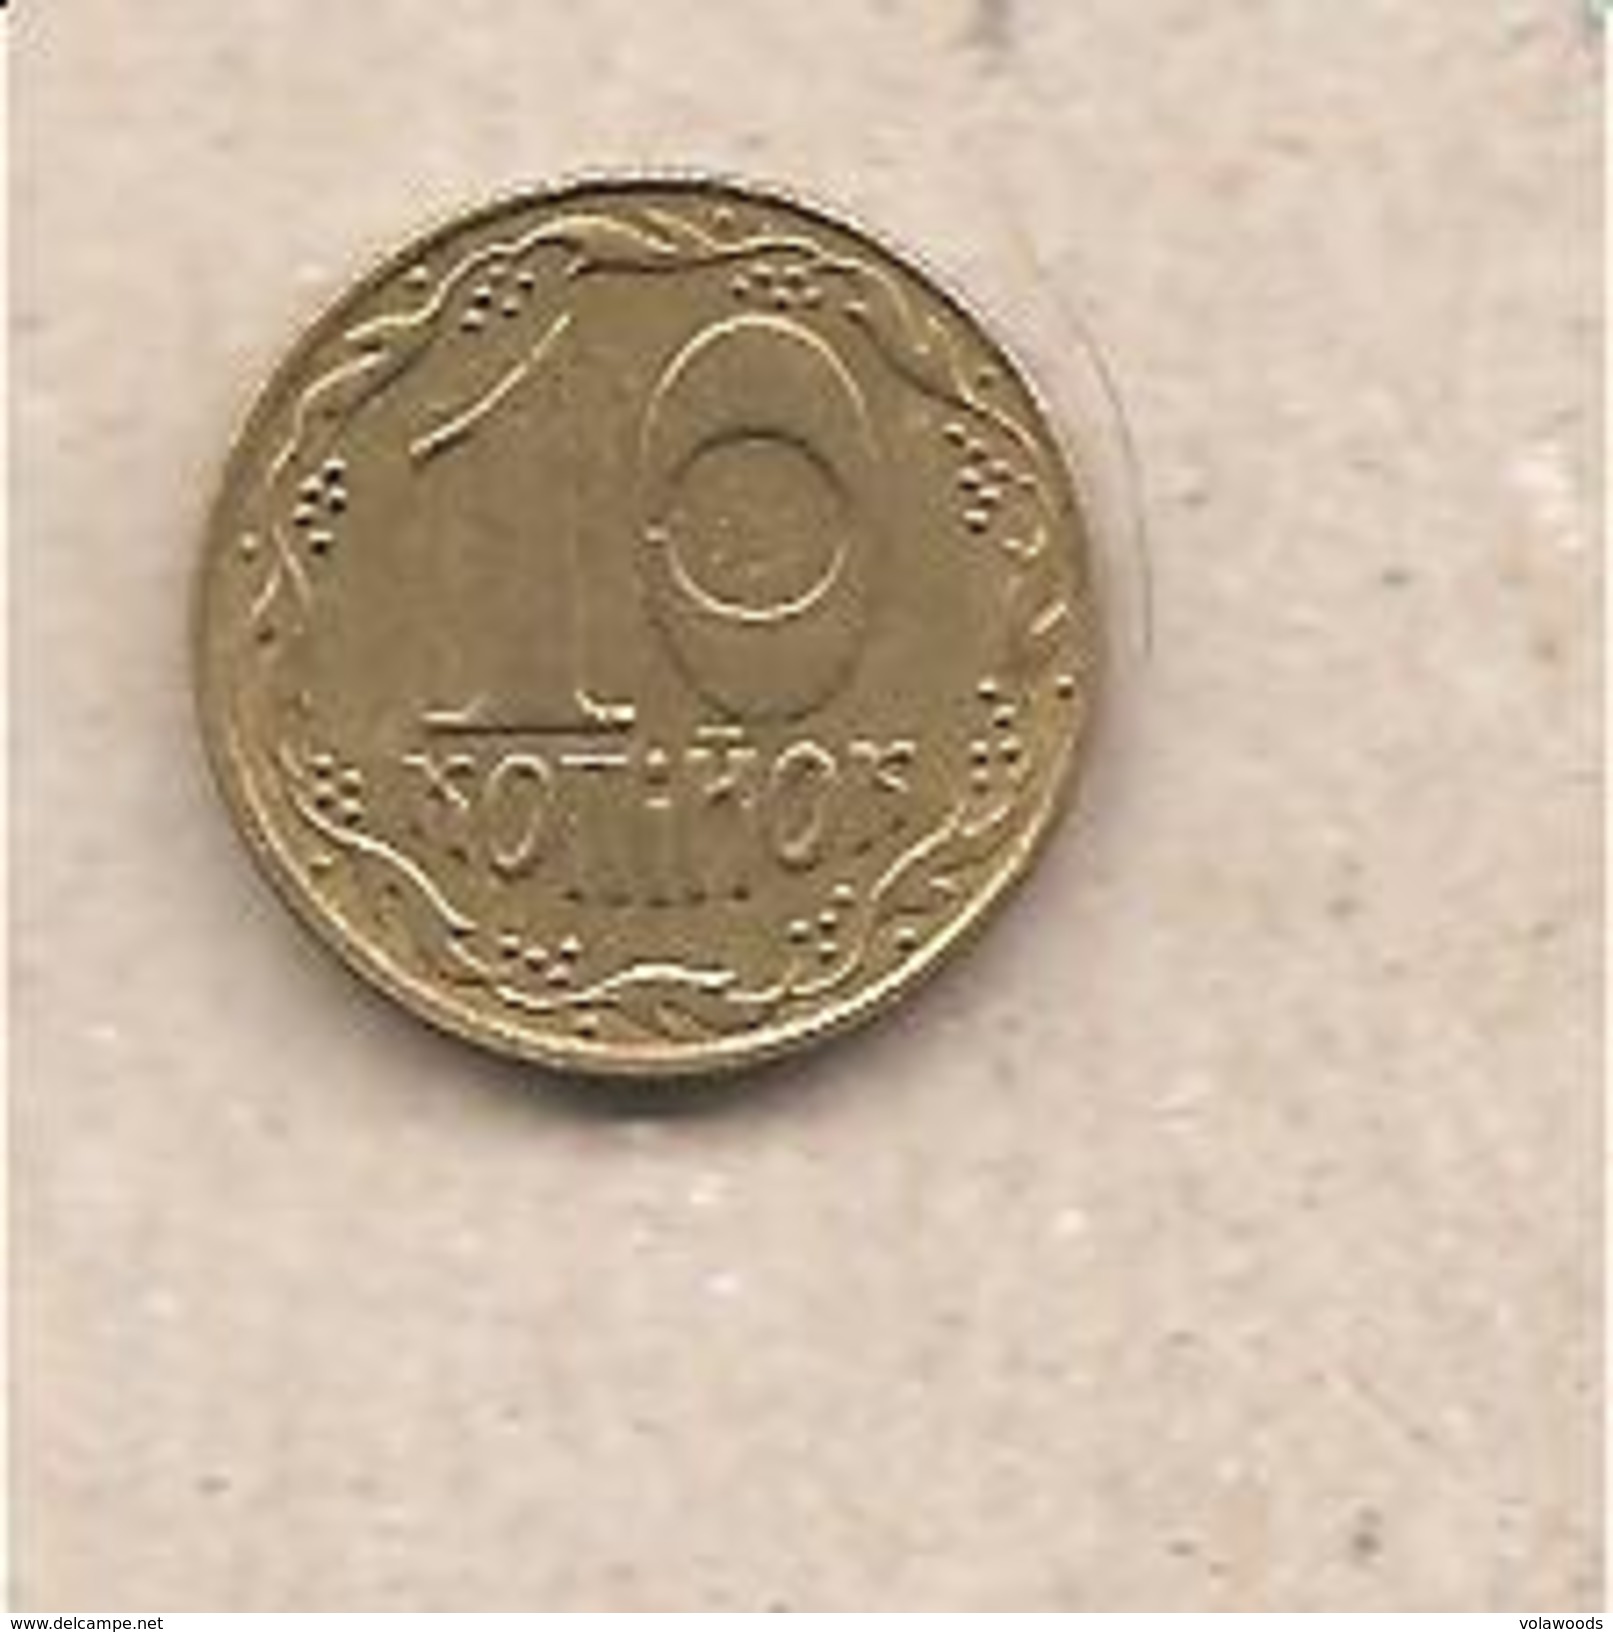 Ucraina - Moneta Circolata Da 10 Kopiyka "4 Frutti Di Bosco" - 1992 - Ukraine